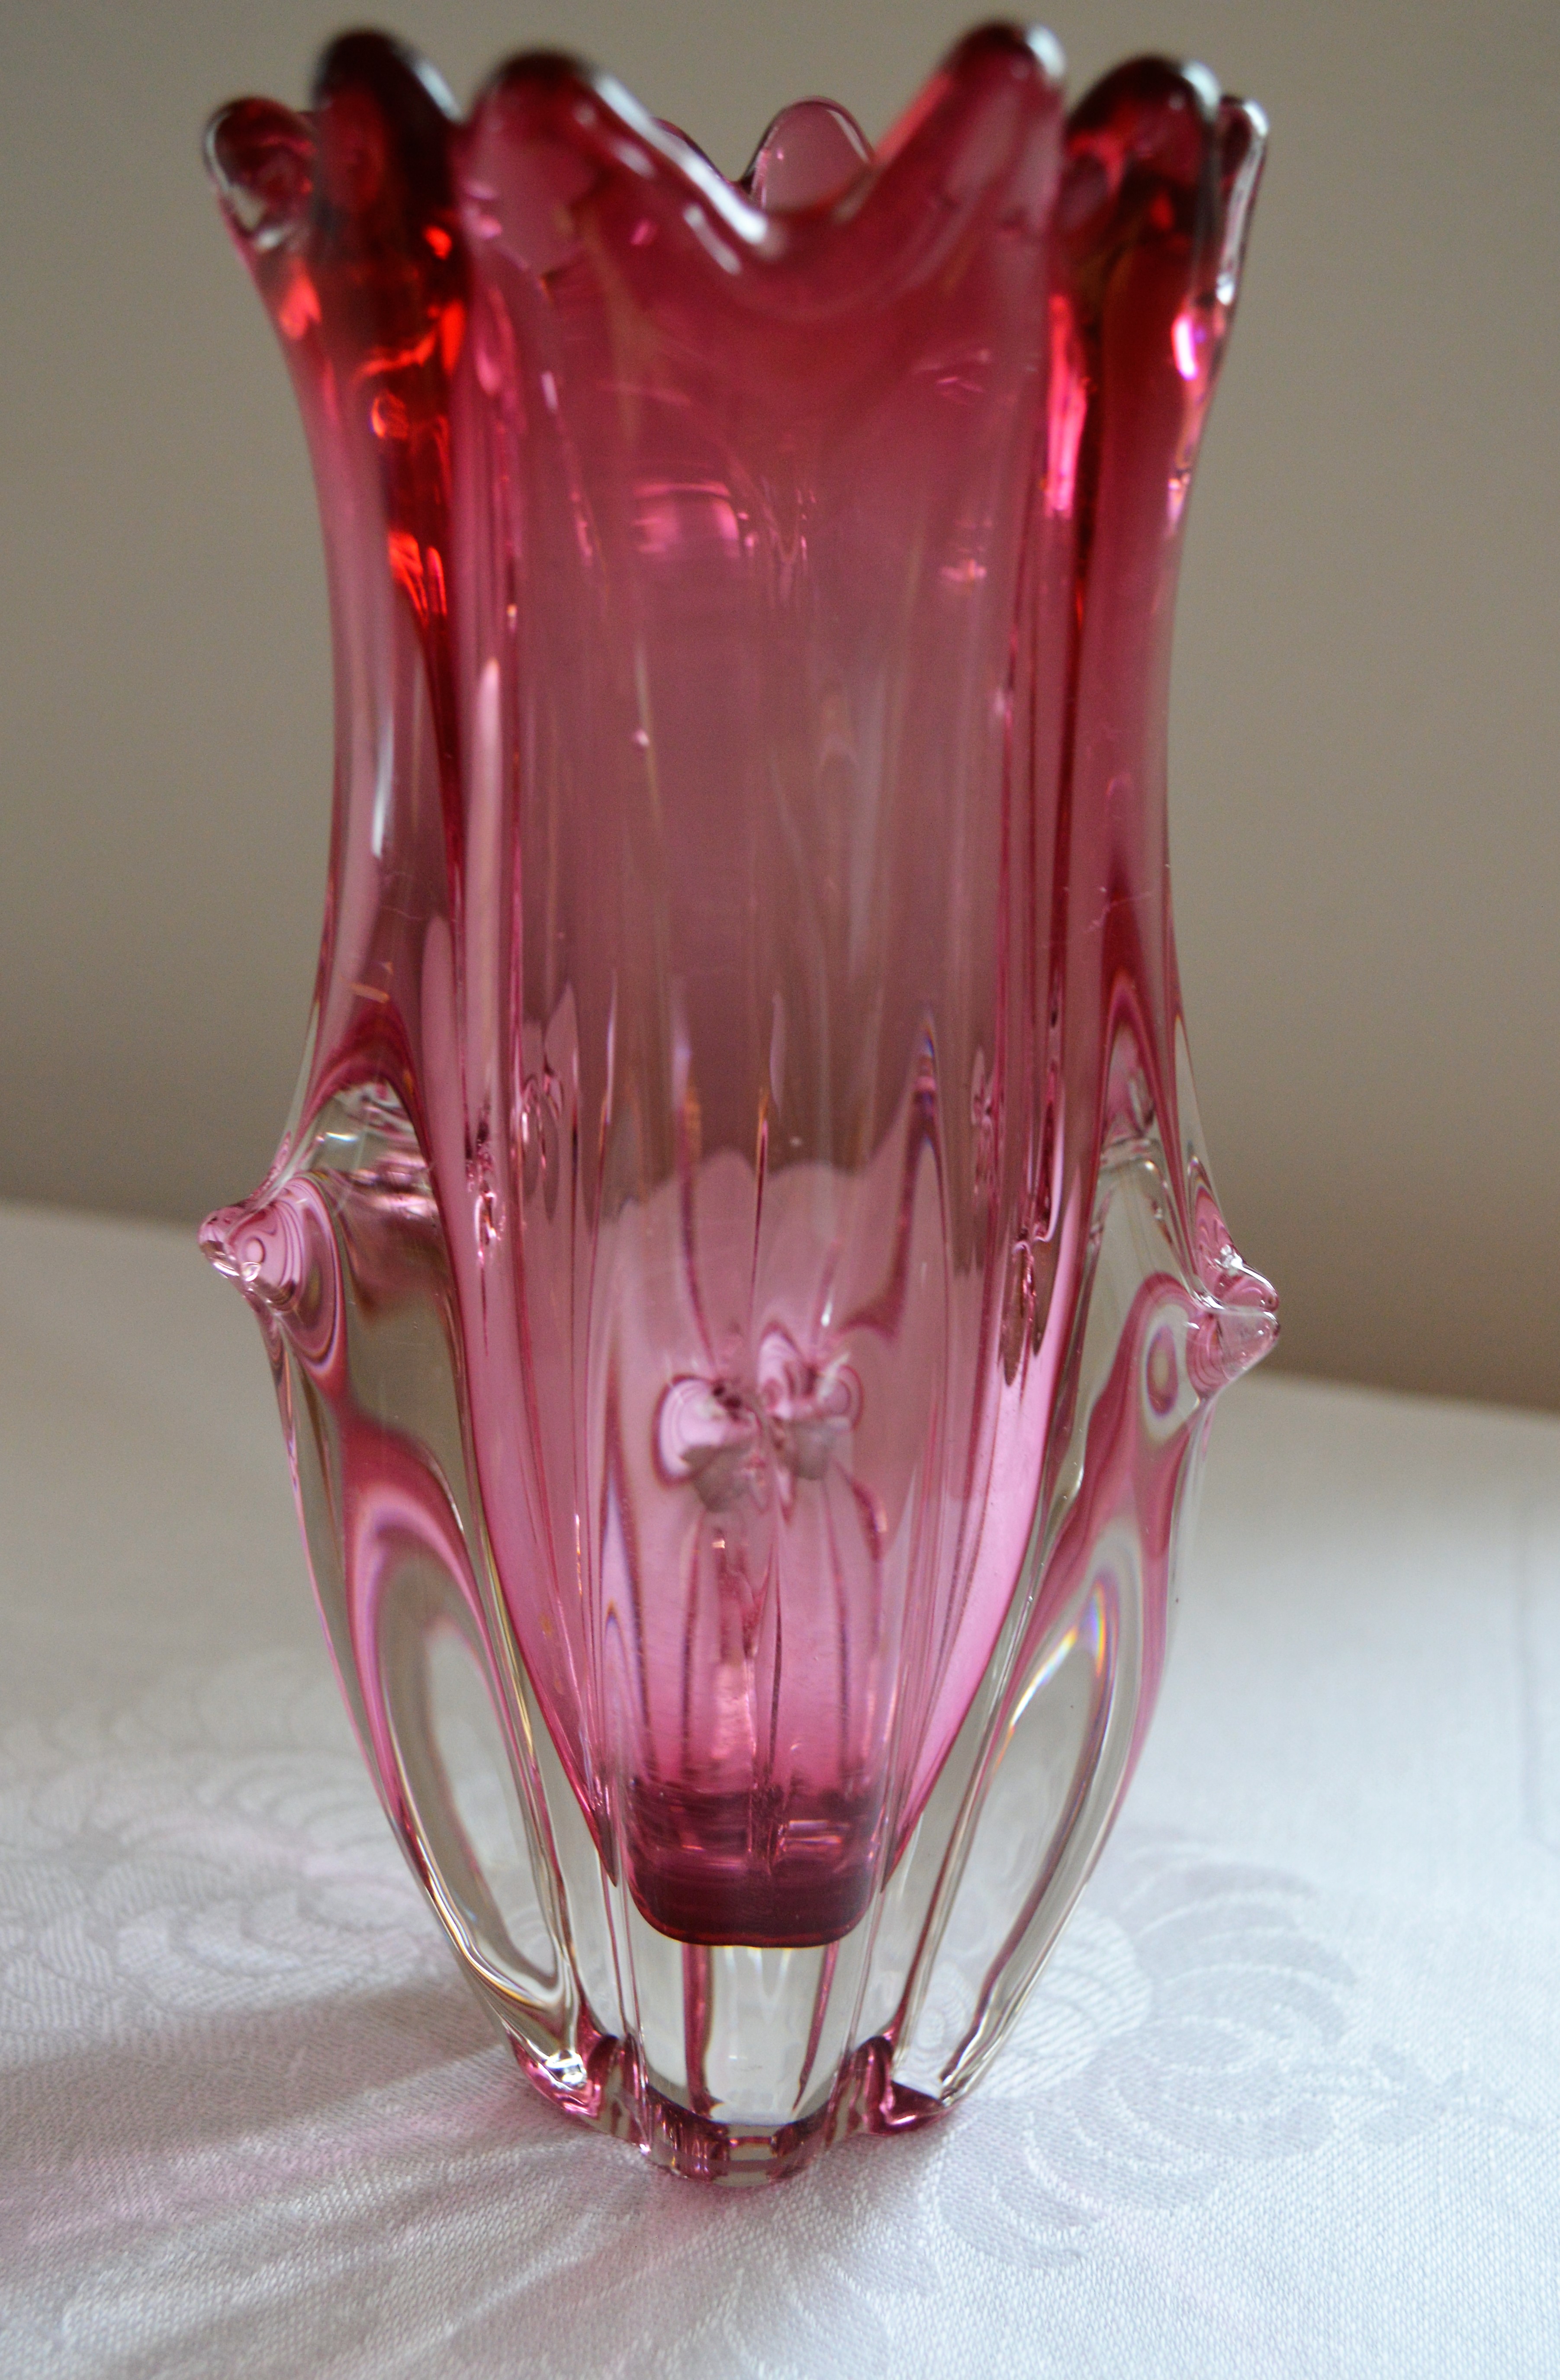 Lednicke Rovne Pink Vase | La Boheme Collectables